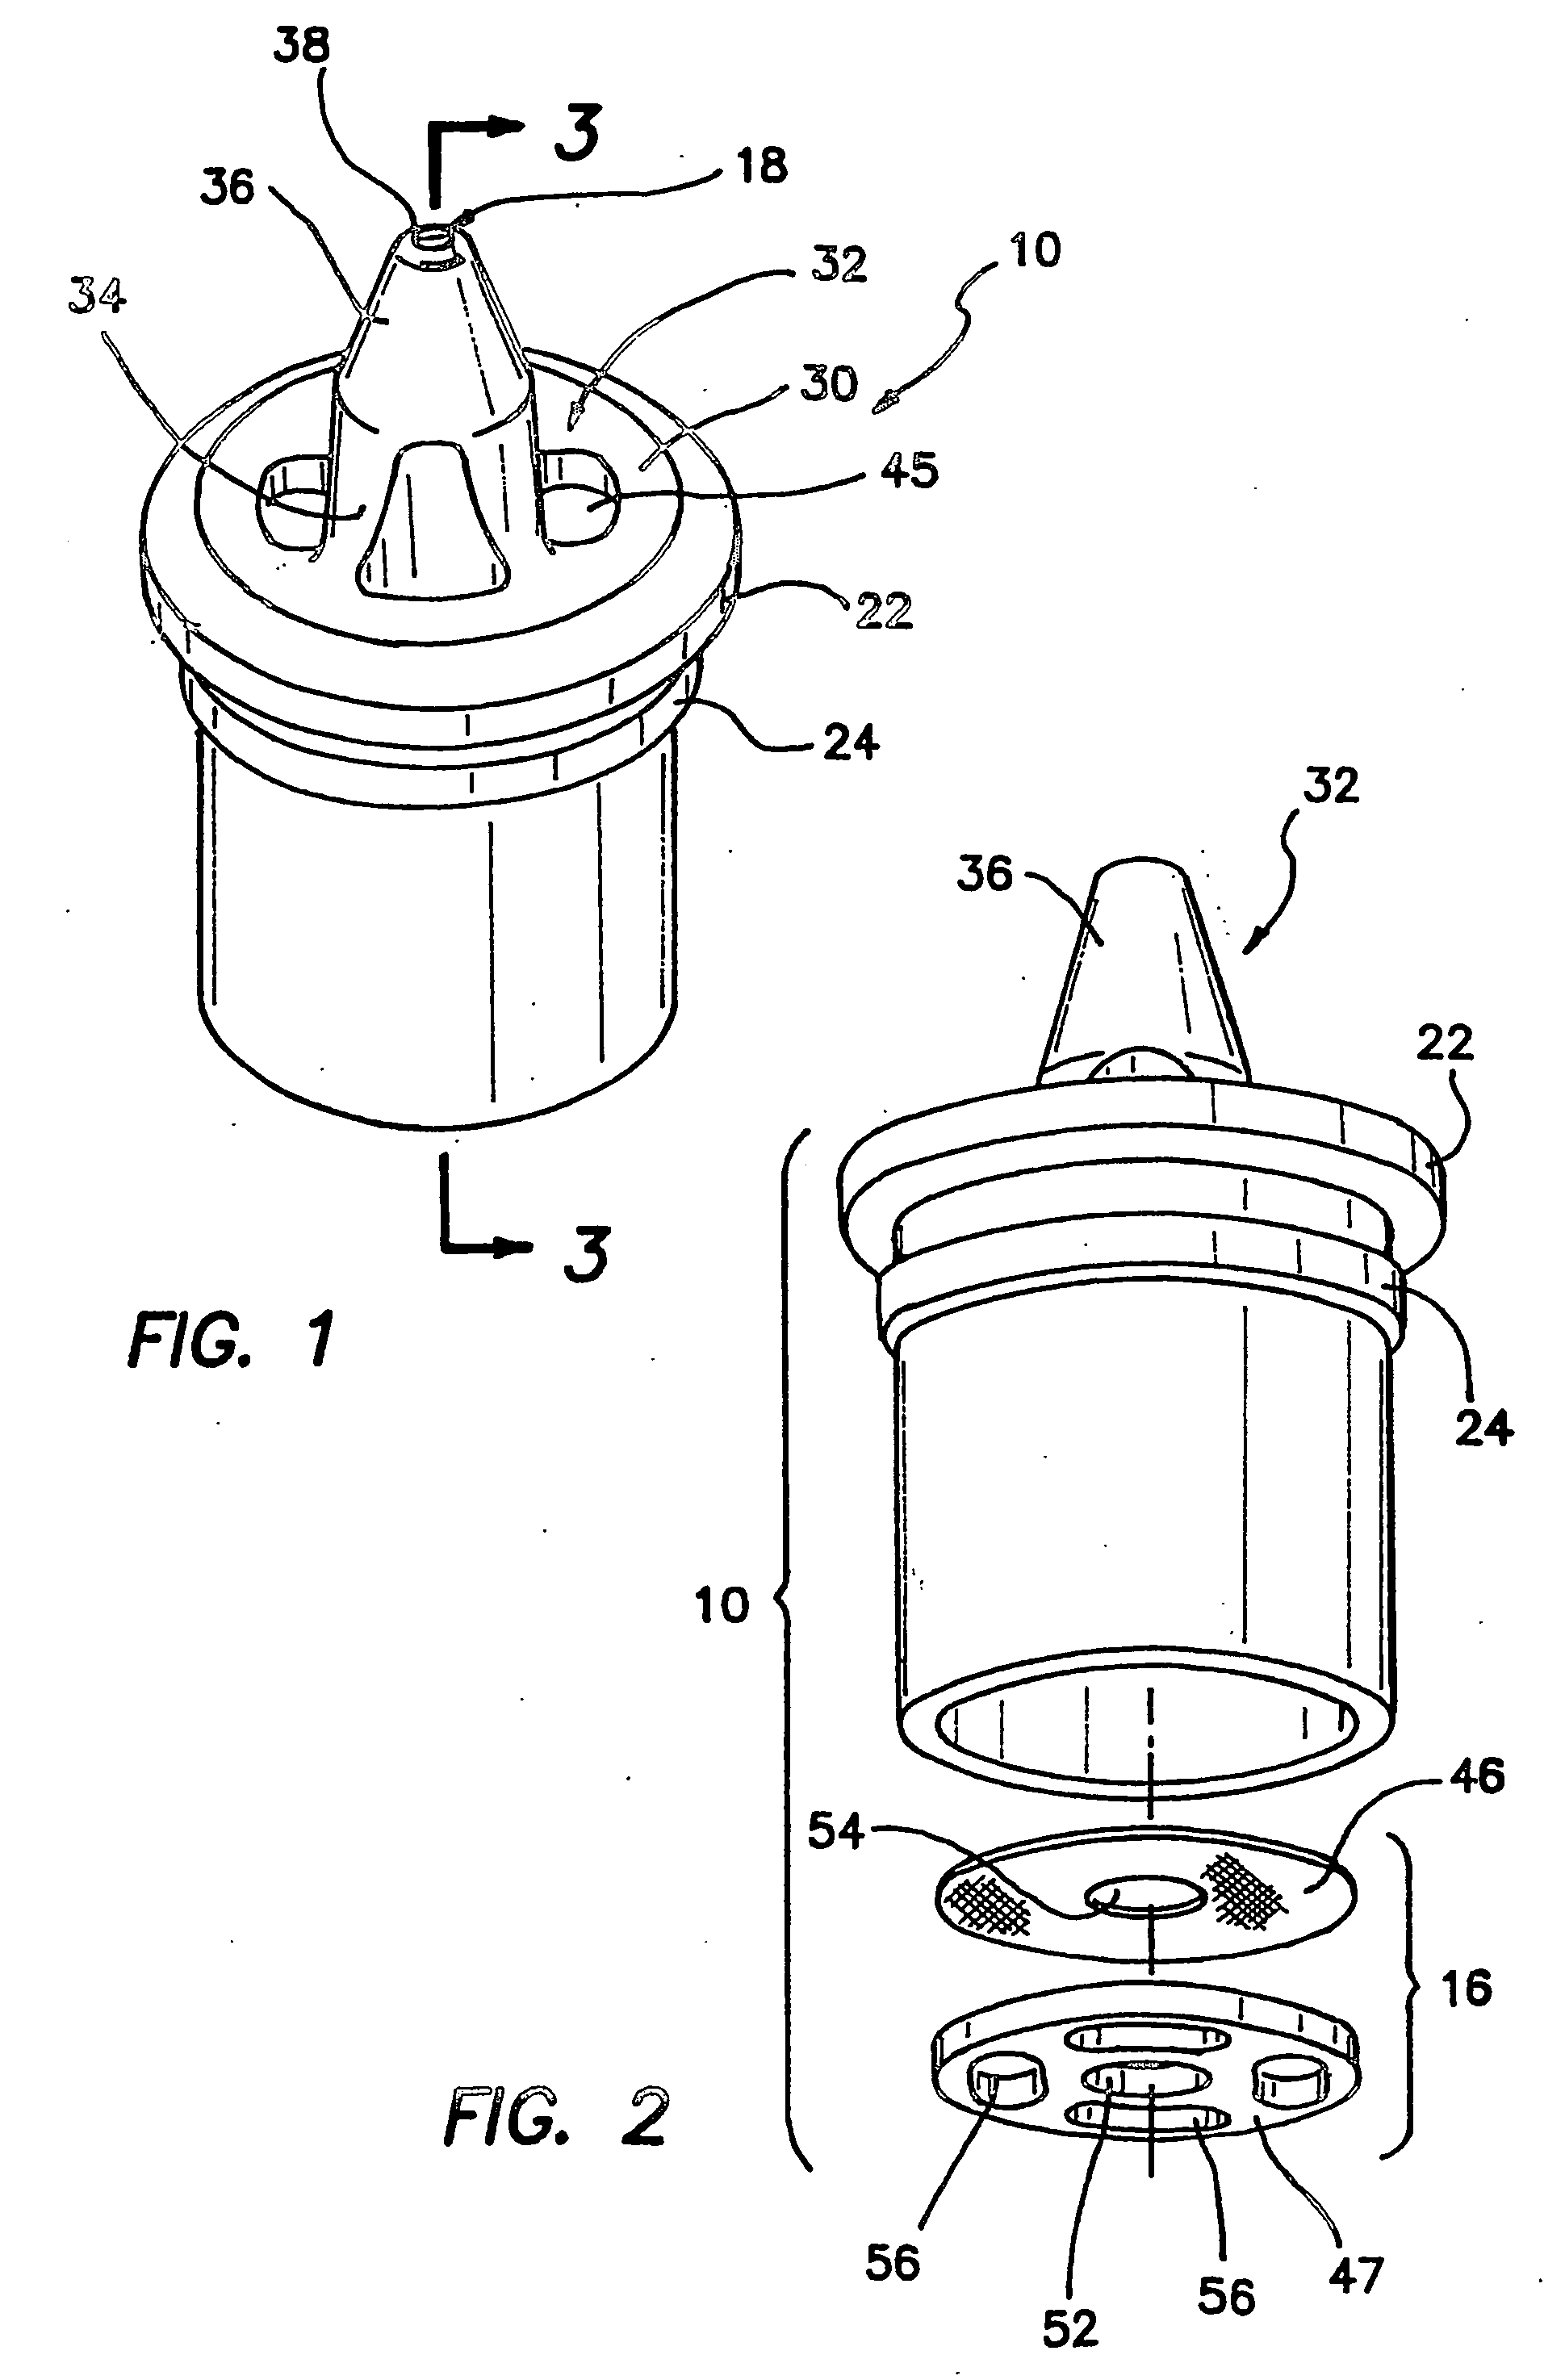 Multi-dose liquid dispensing assembly